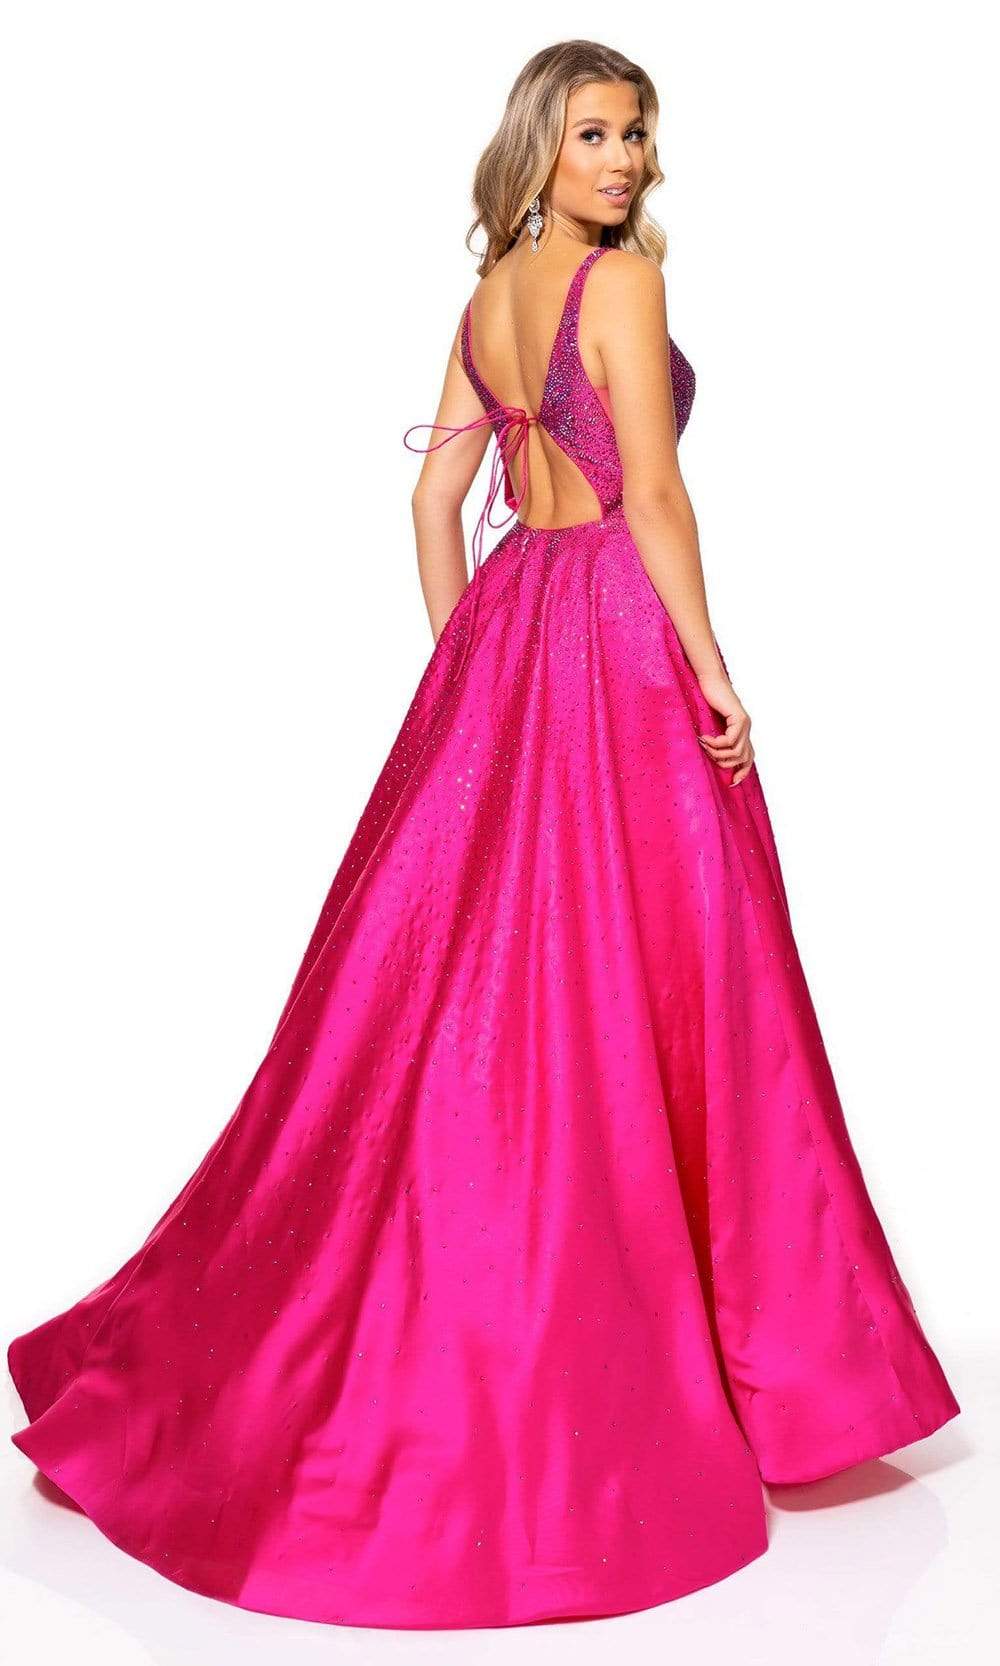 Rachel Allan - 70212 Beaded Scoop Back A-Line Gown Prom Dresses